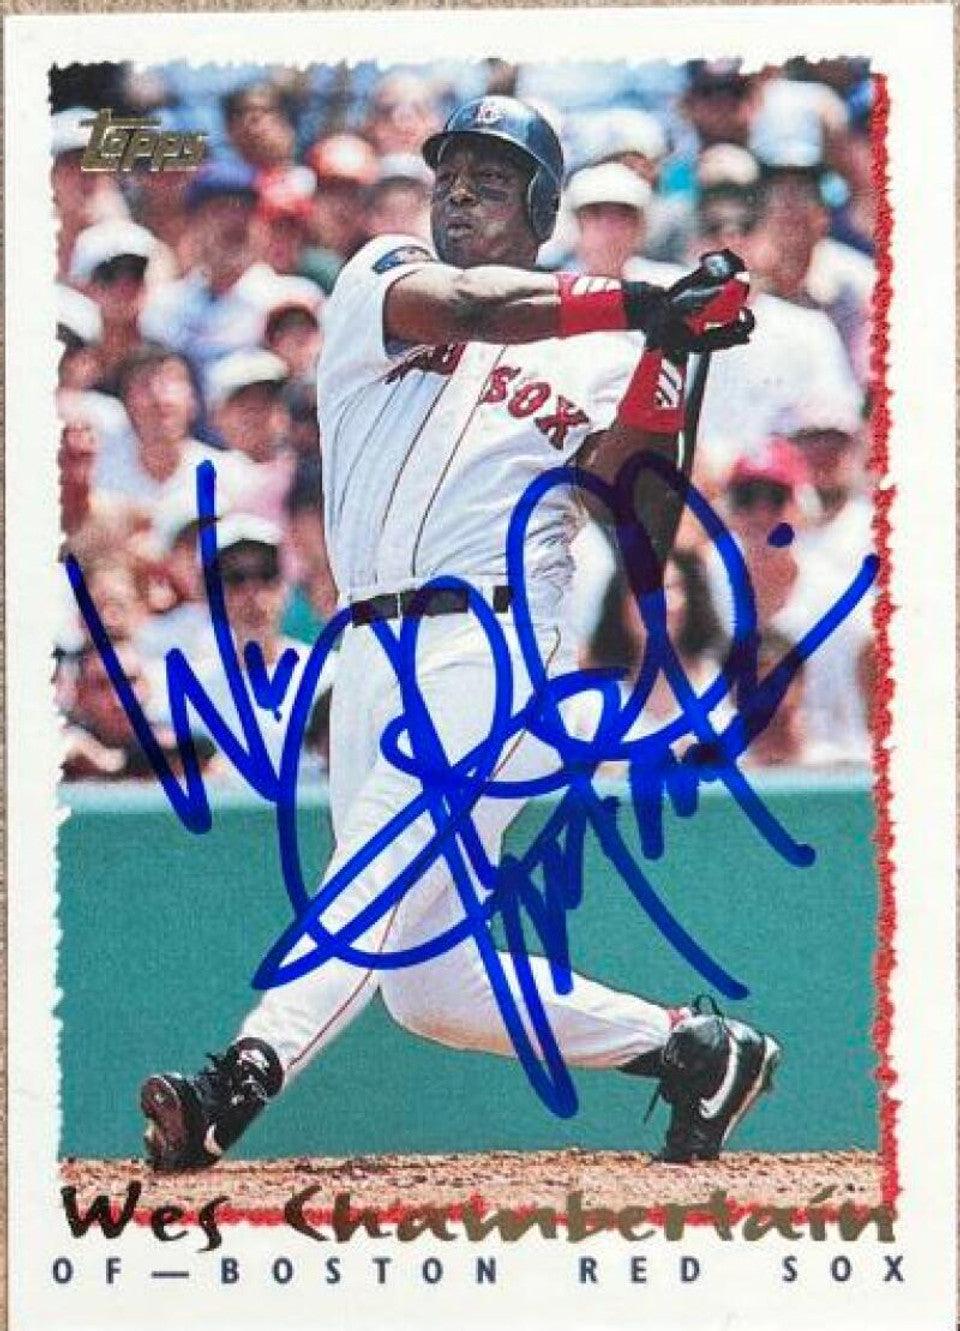 Wes Chamberlain Signed 1995 Topps Baseball Card - Boston Red Sox - PastPros